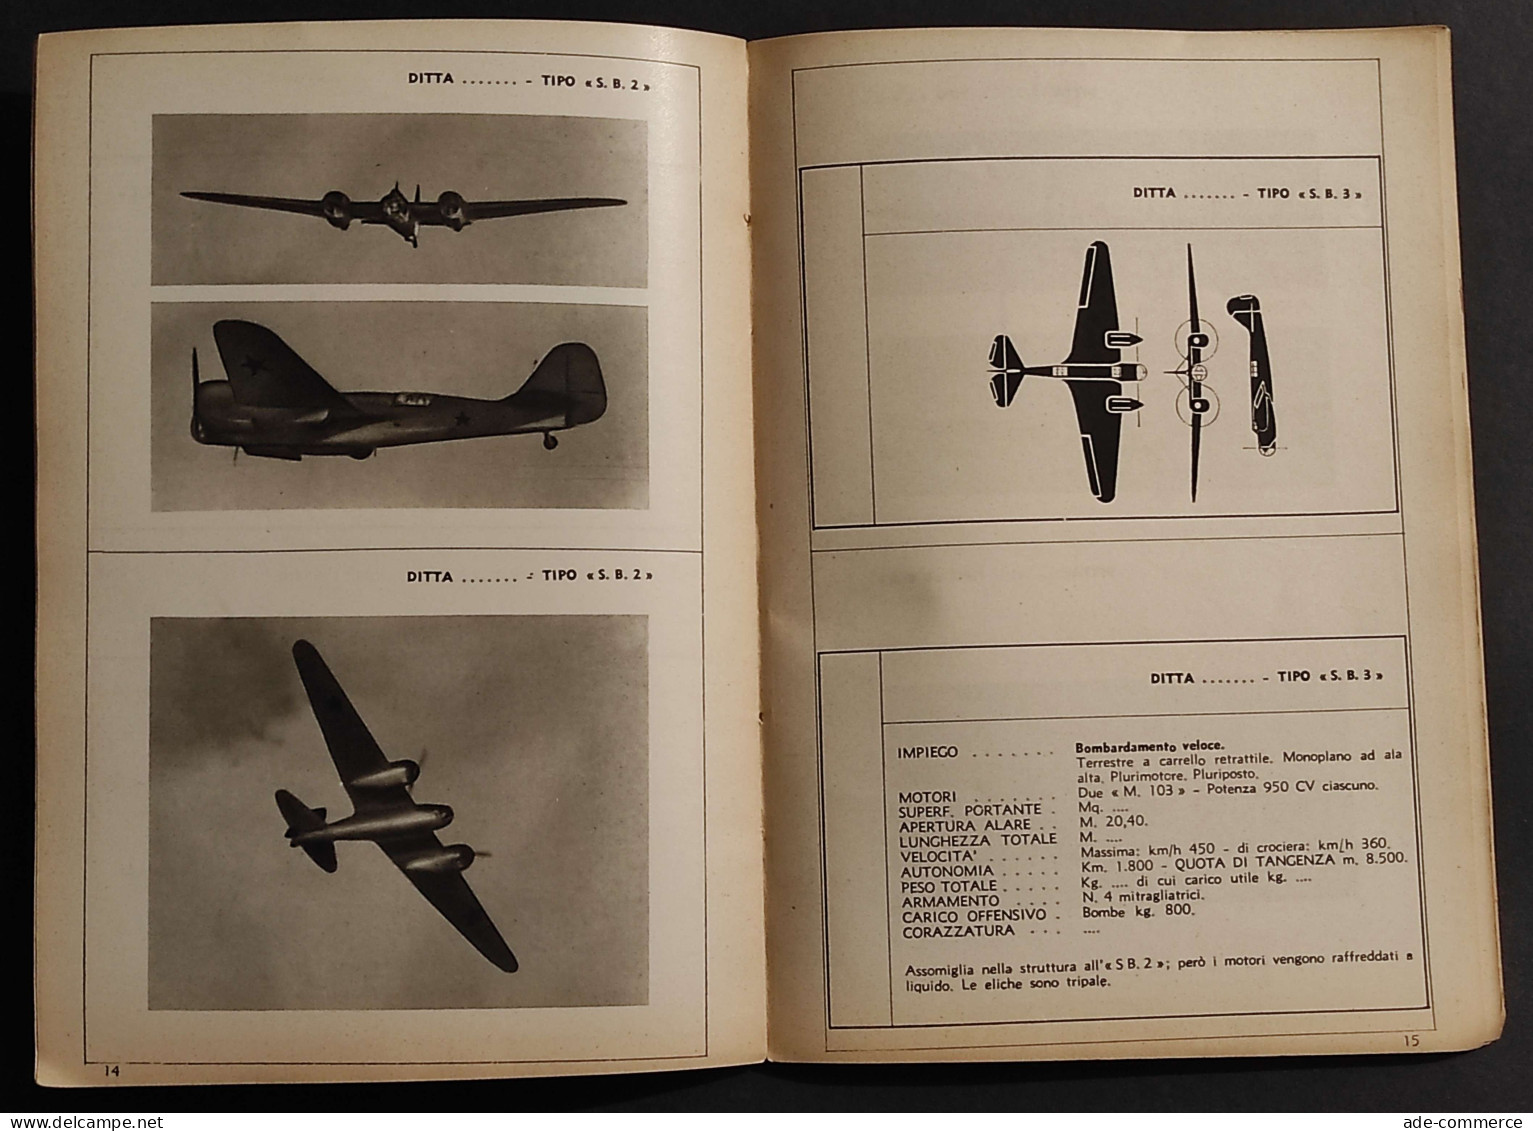 Ecco Il Nemico 15 - Velivoli Sovietici - Ed. Aeronautico - 1942 - Engines